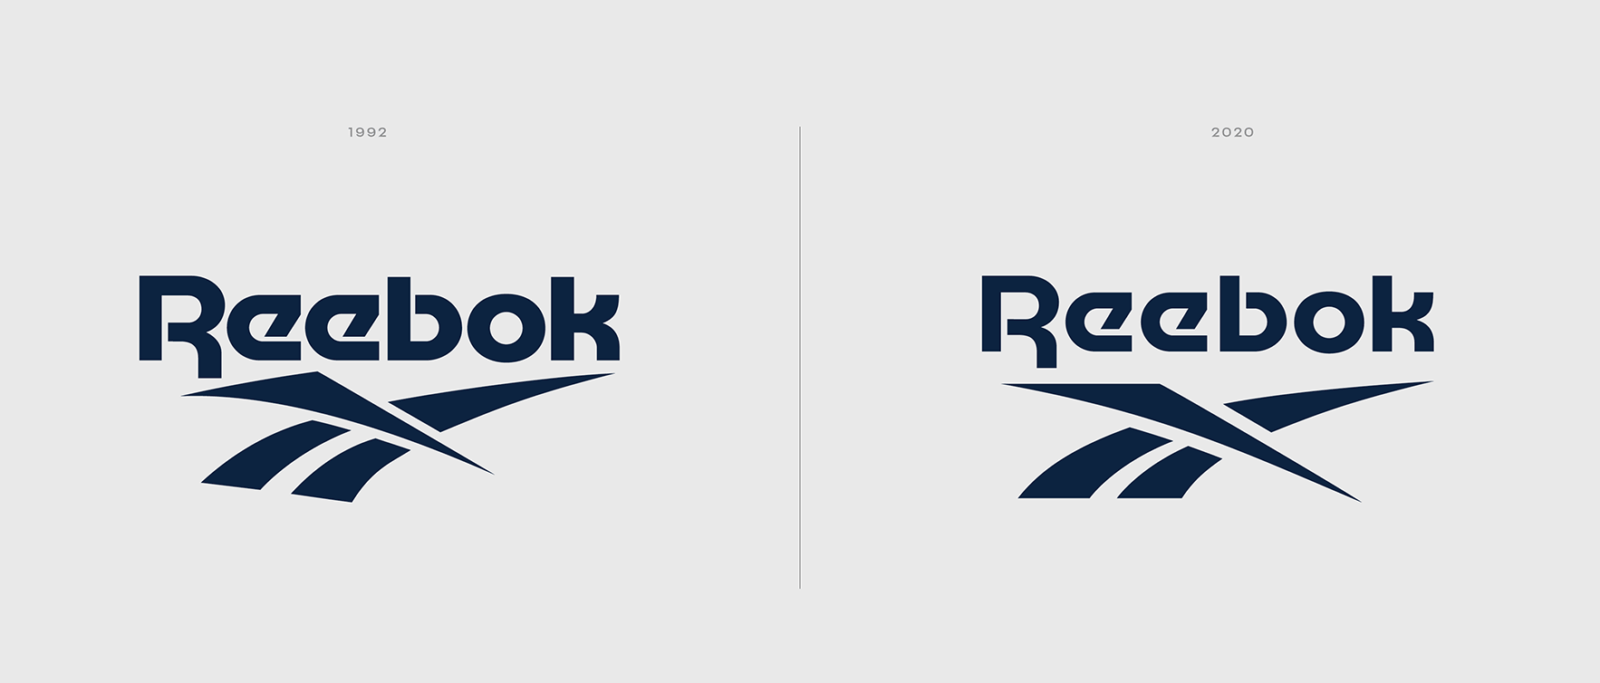 reebok 2019 logo before after original